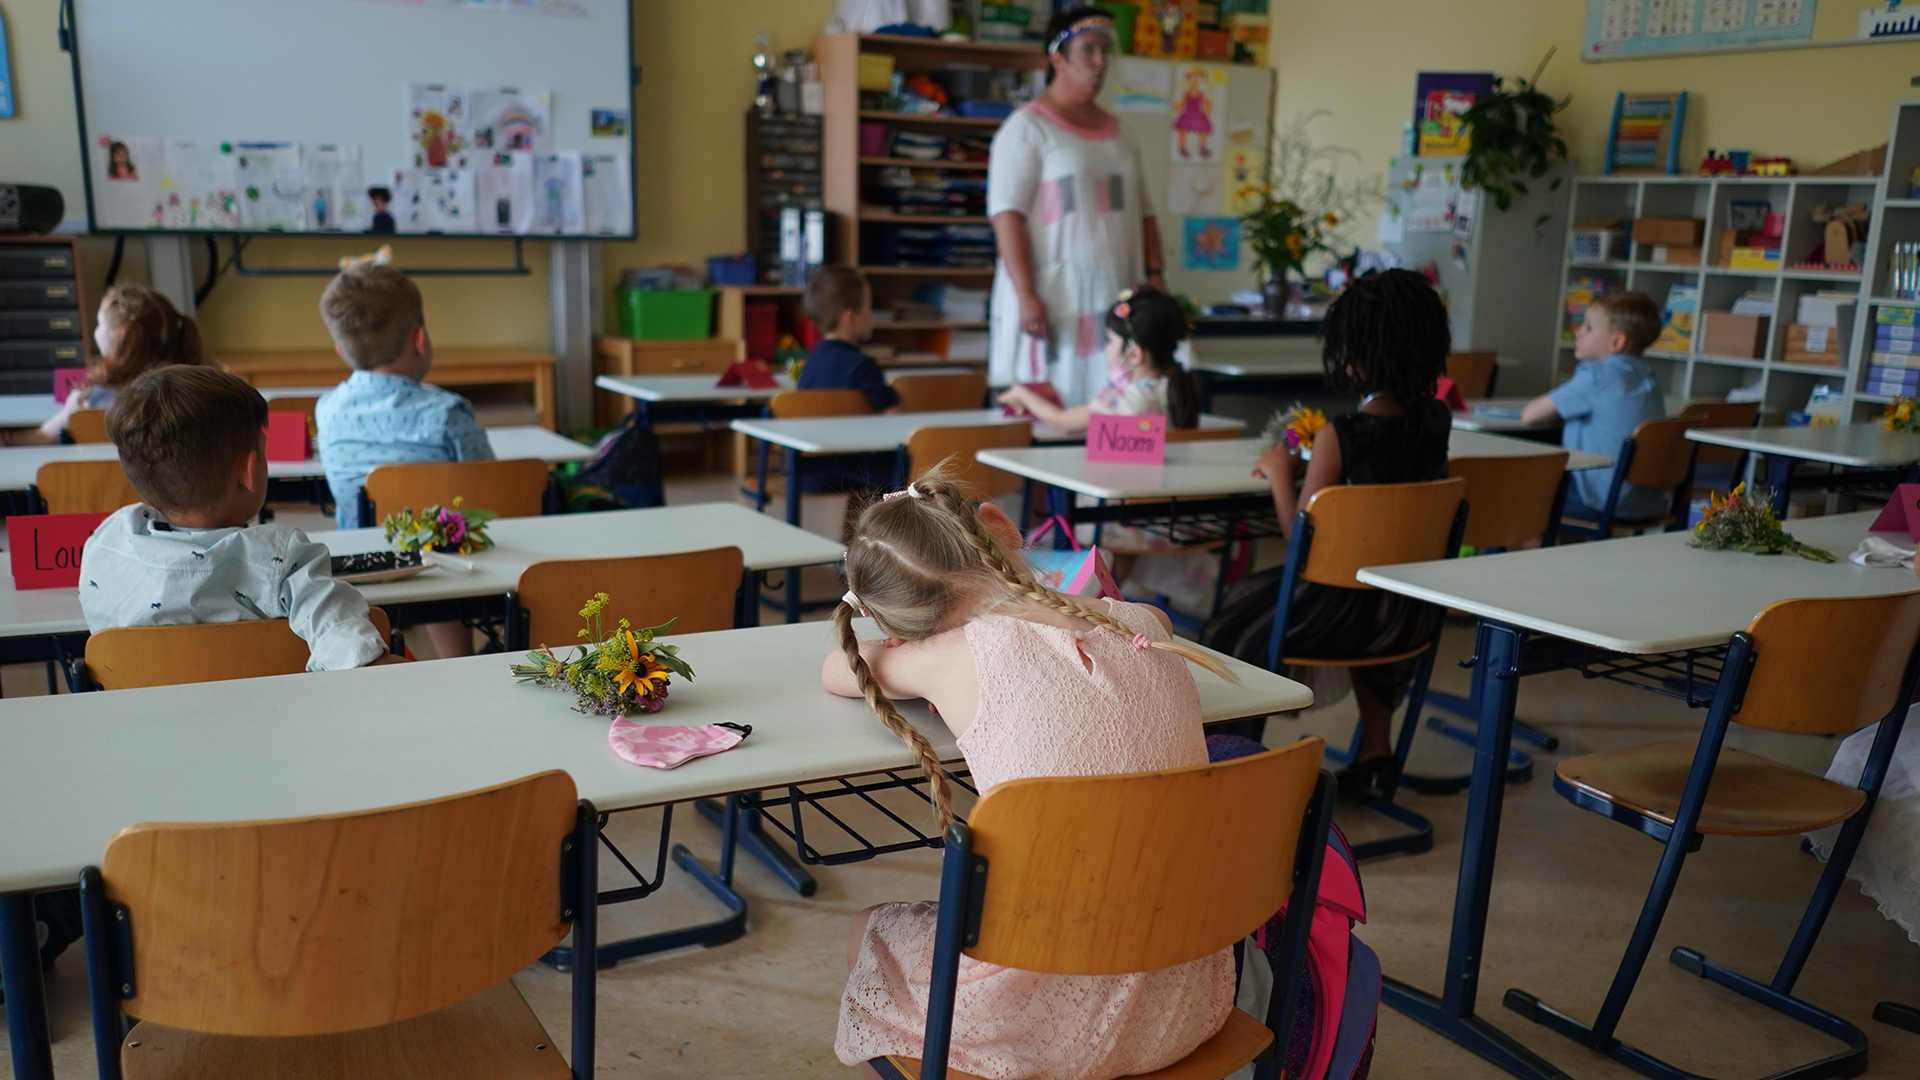 1. Klasse in einer Grundschule im Panketal in Berlin-Karow. (Archivbild: 15.08.2020) | picture alliance/dpa